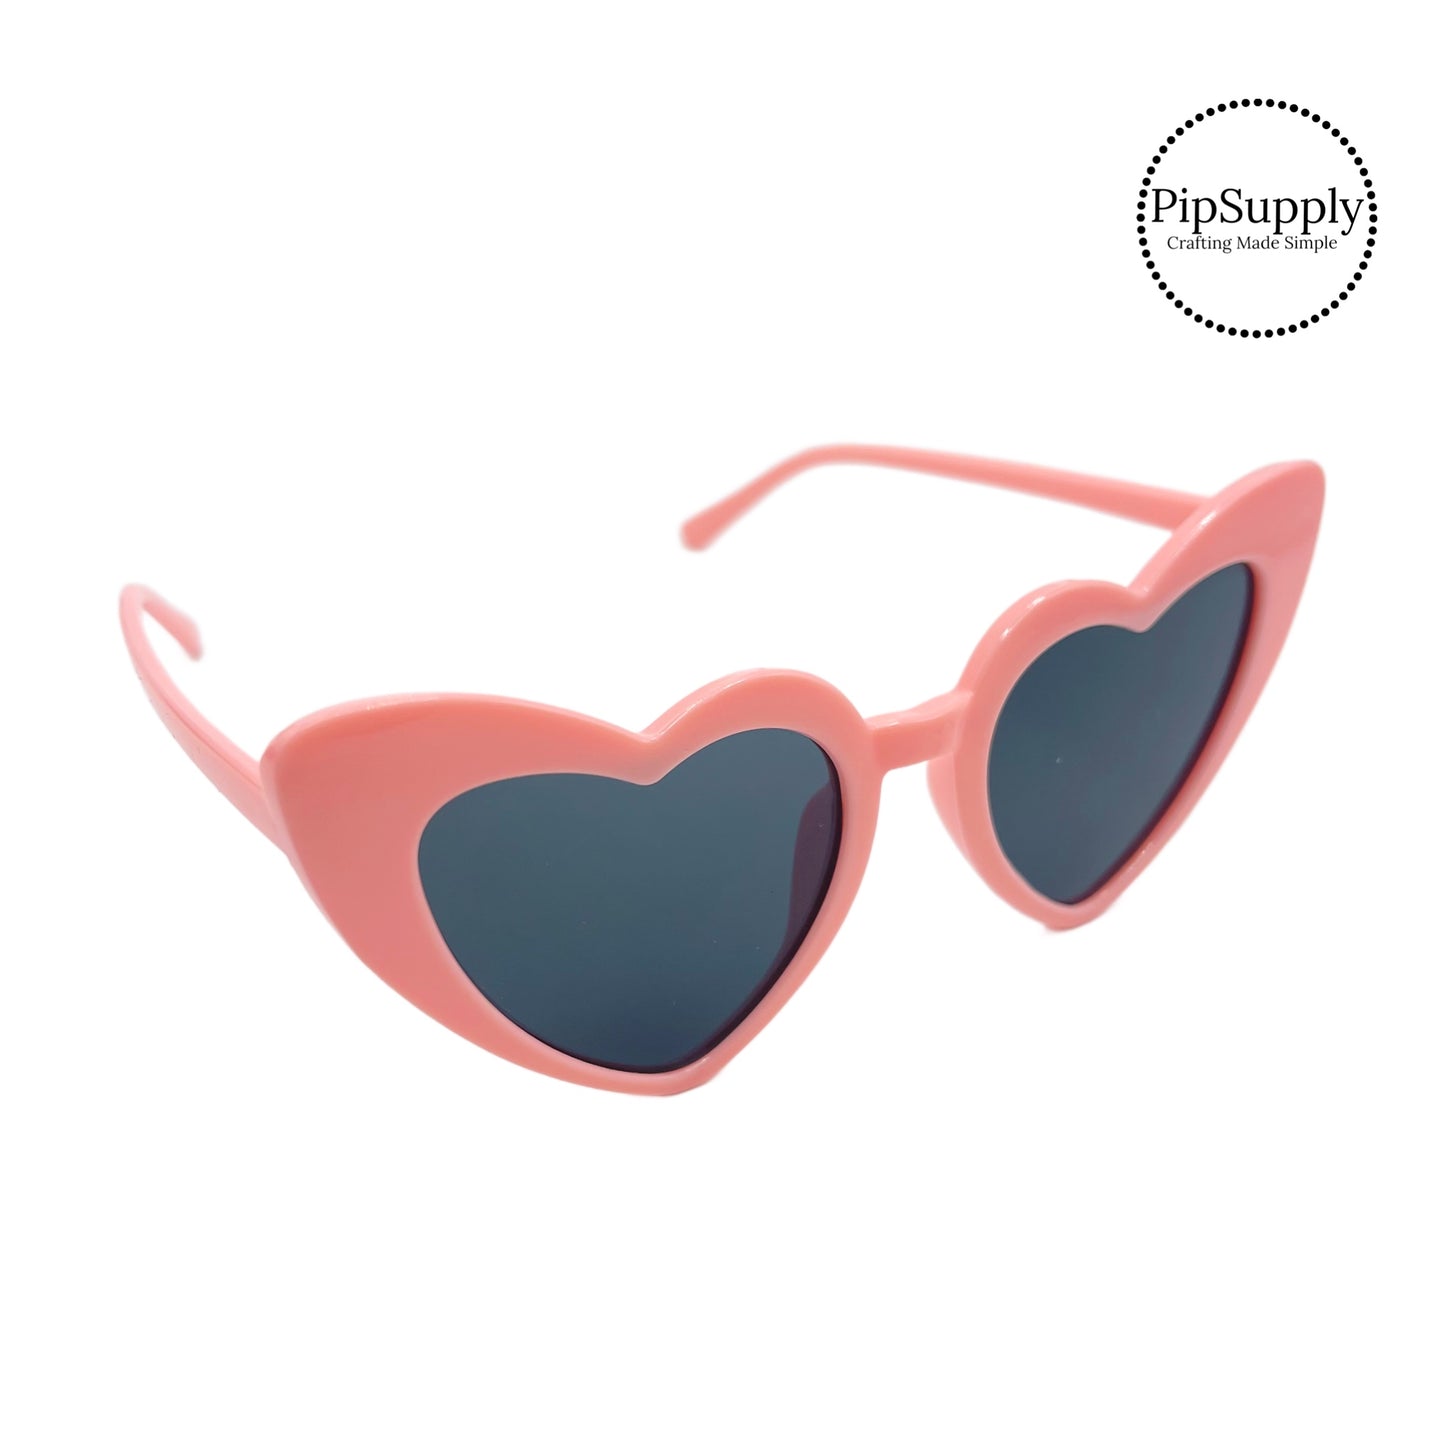 Solid peachy pink heart cat eye sunglasses